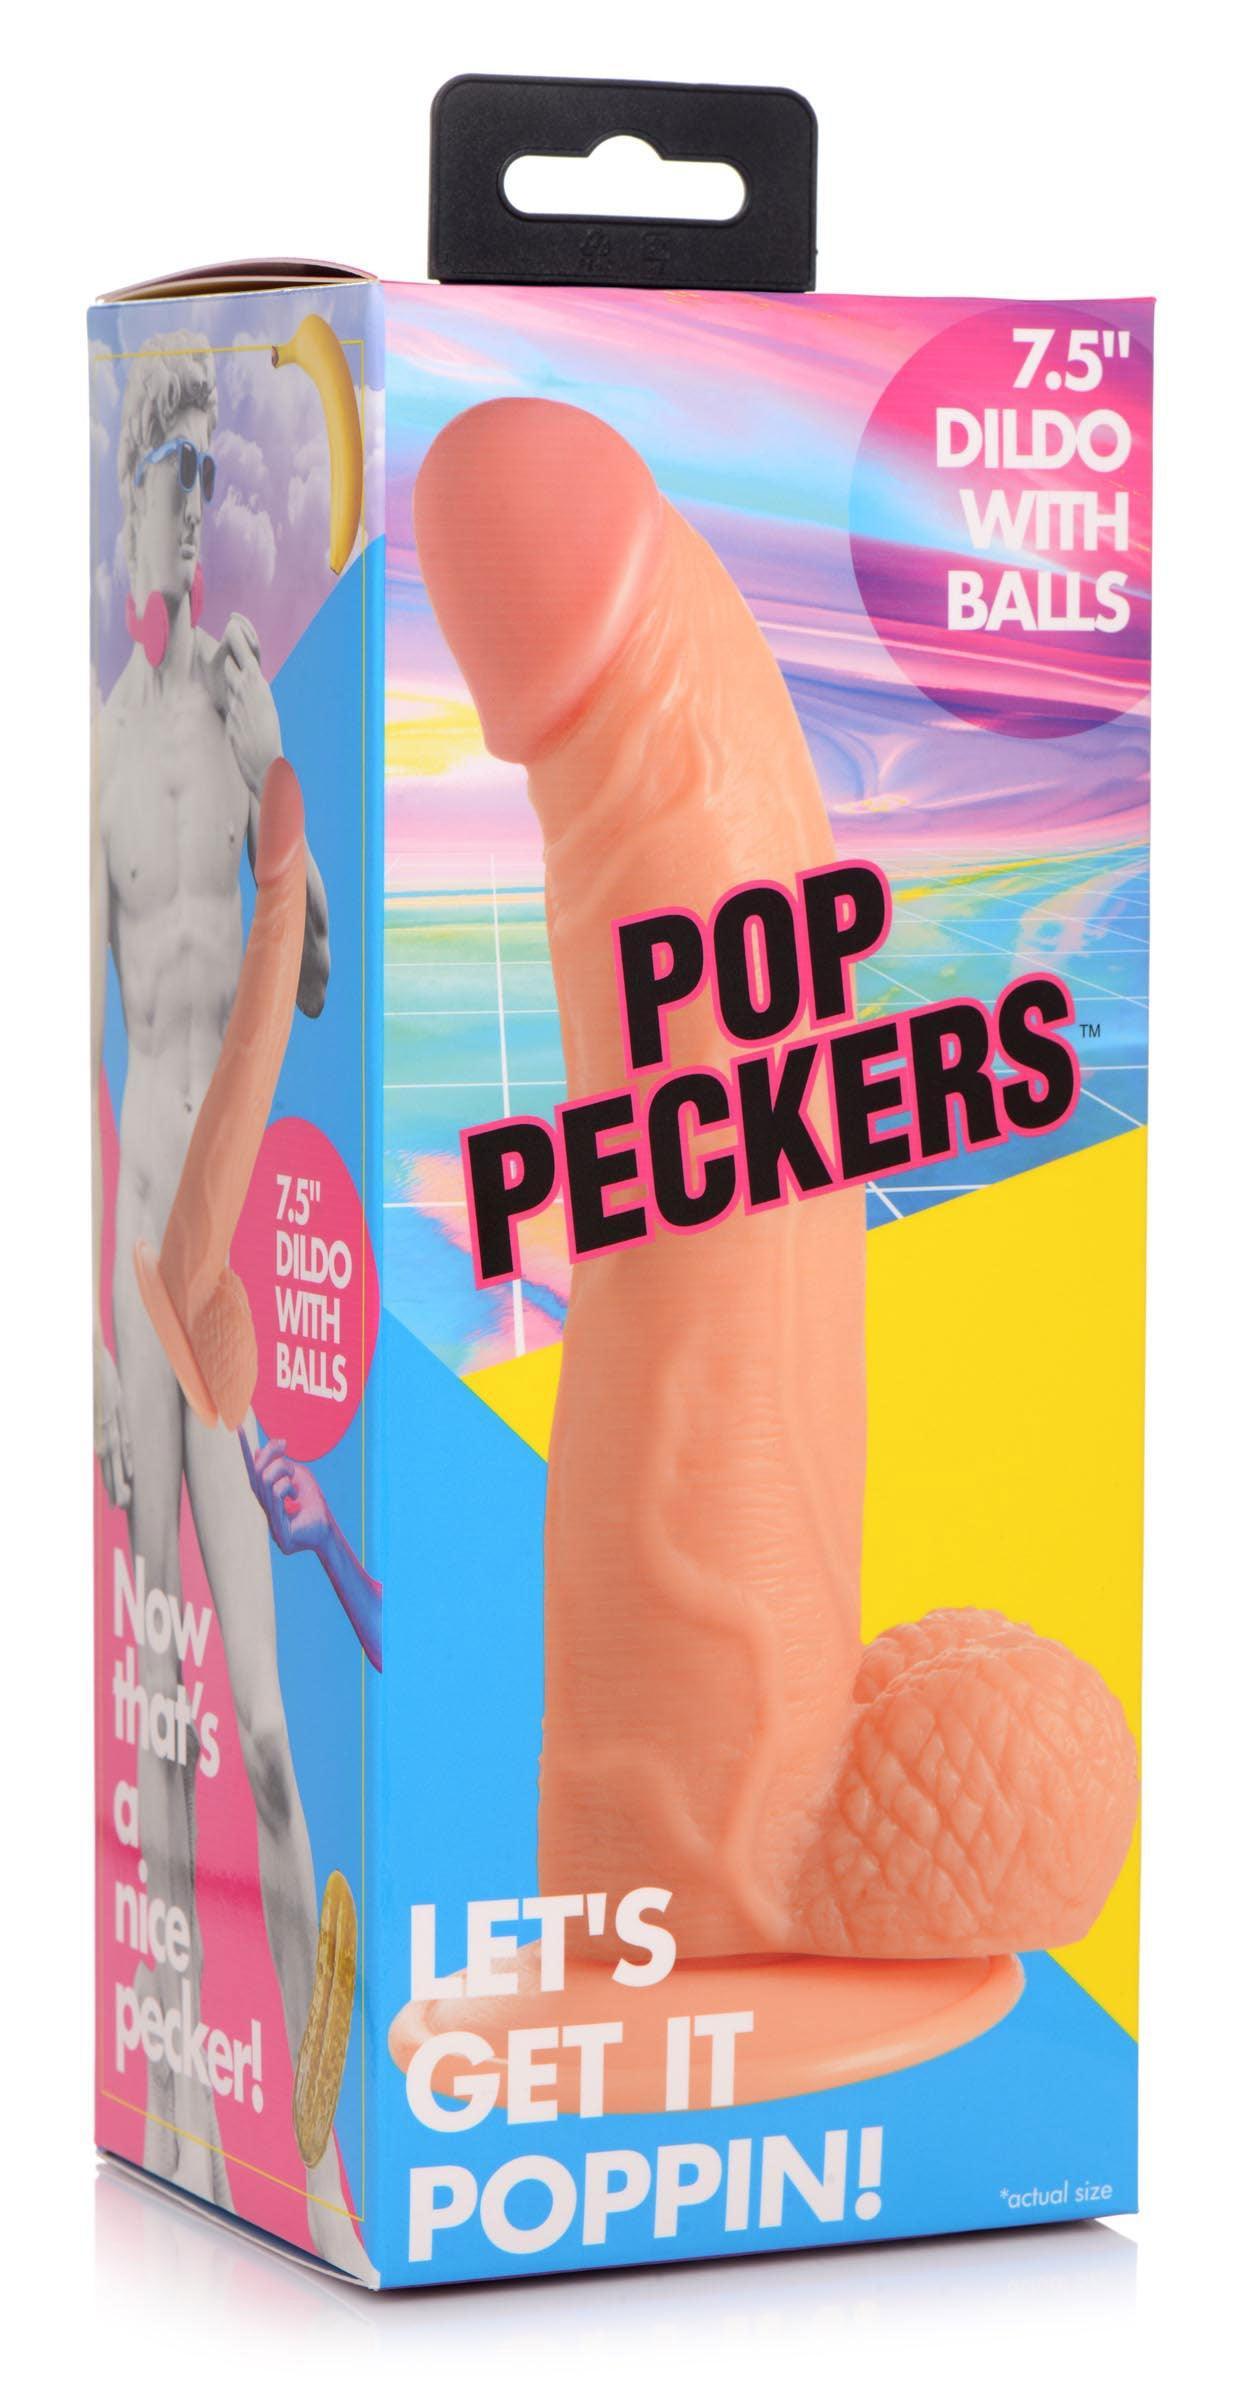 Pop Pecker 7.5 Inch Dildo With Balls - Light - My Sex Toy Hub